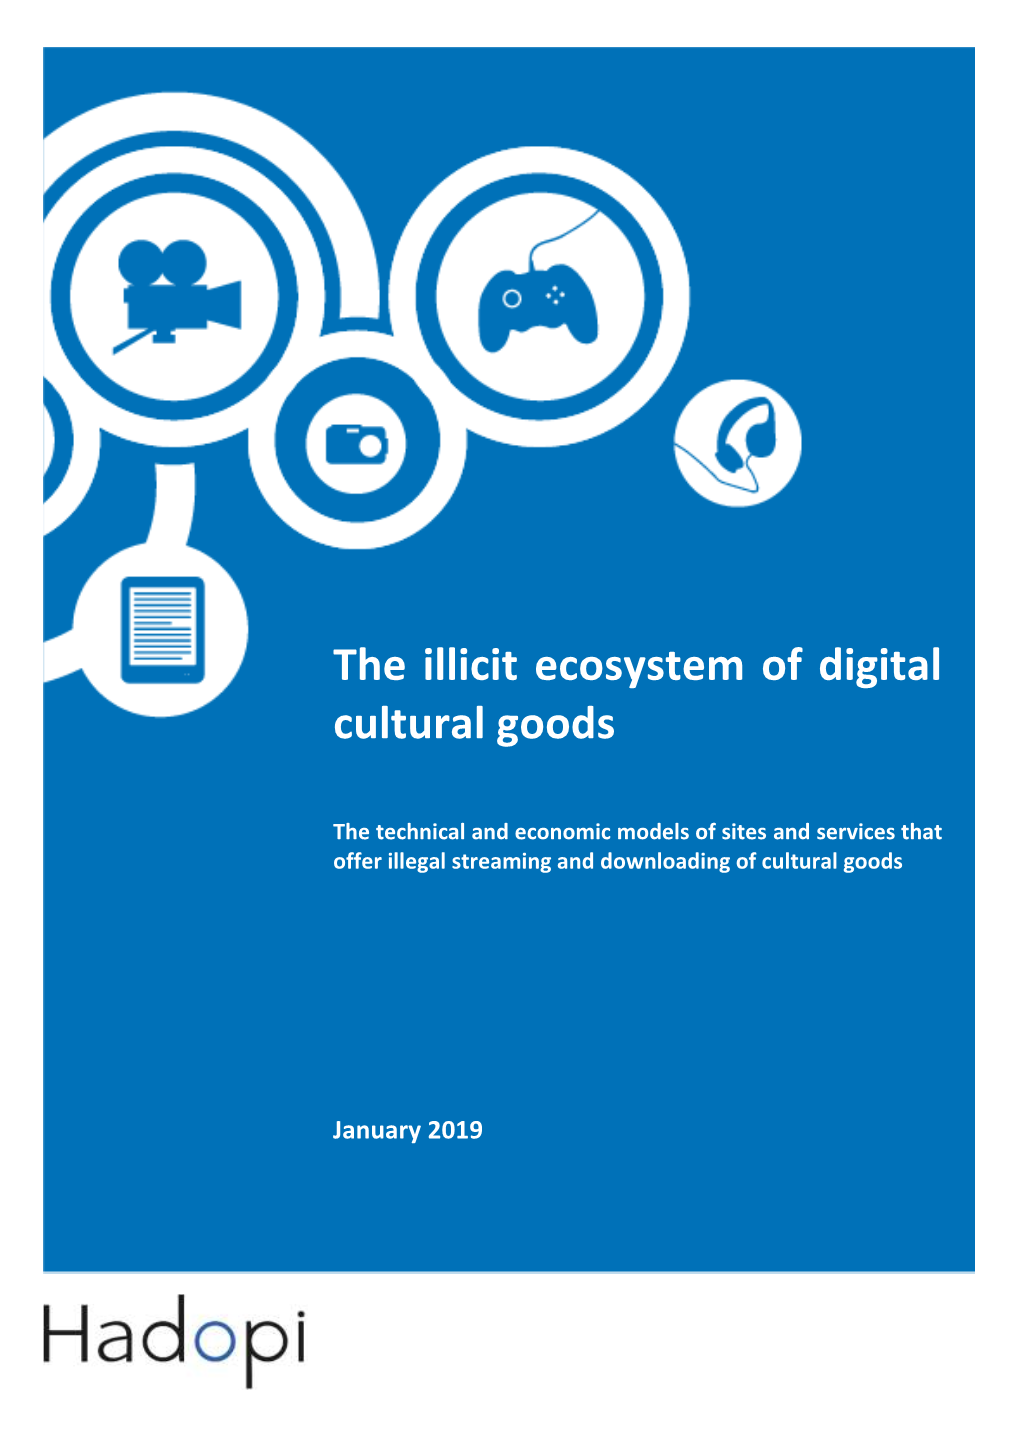 The Illicit Ecosystem of Digital Cultural Goods